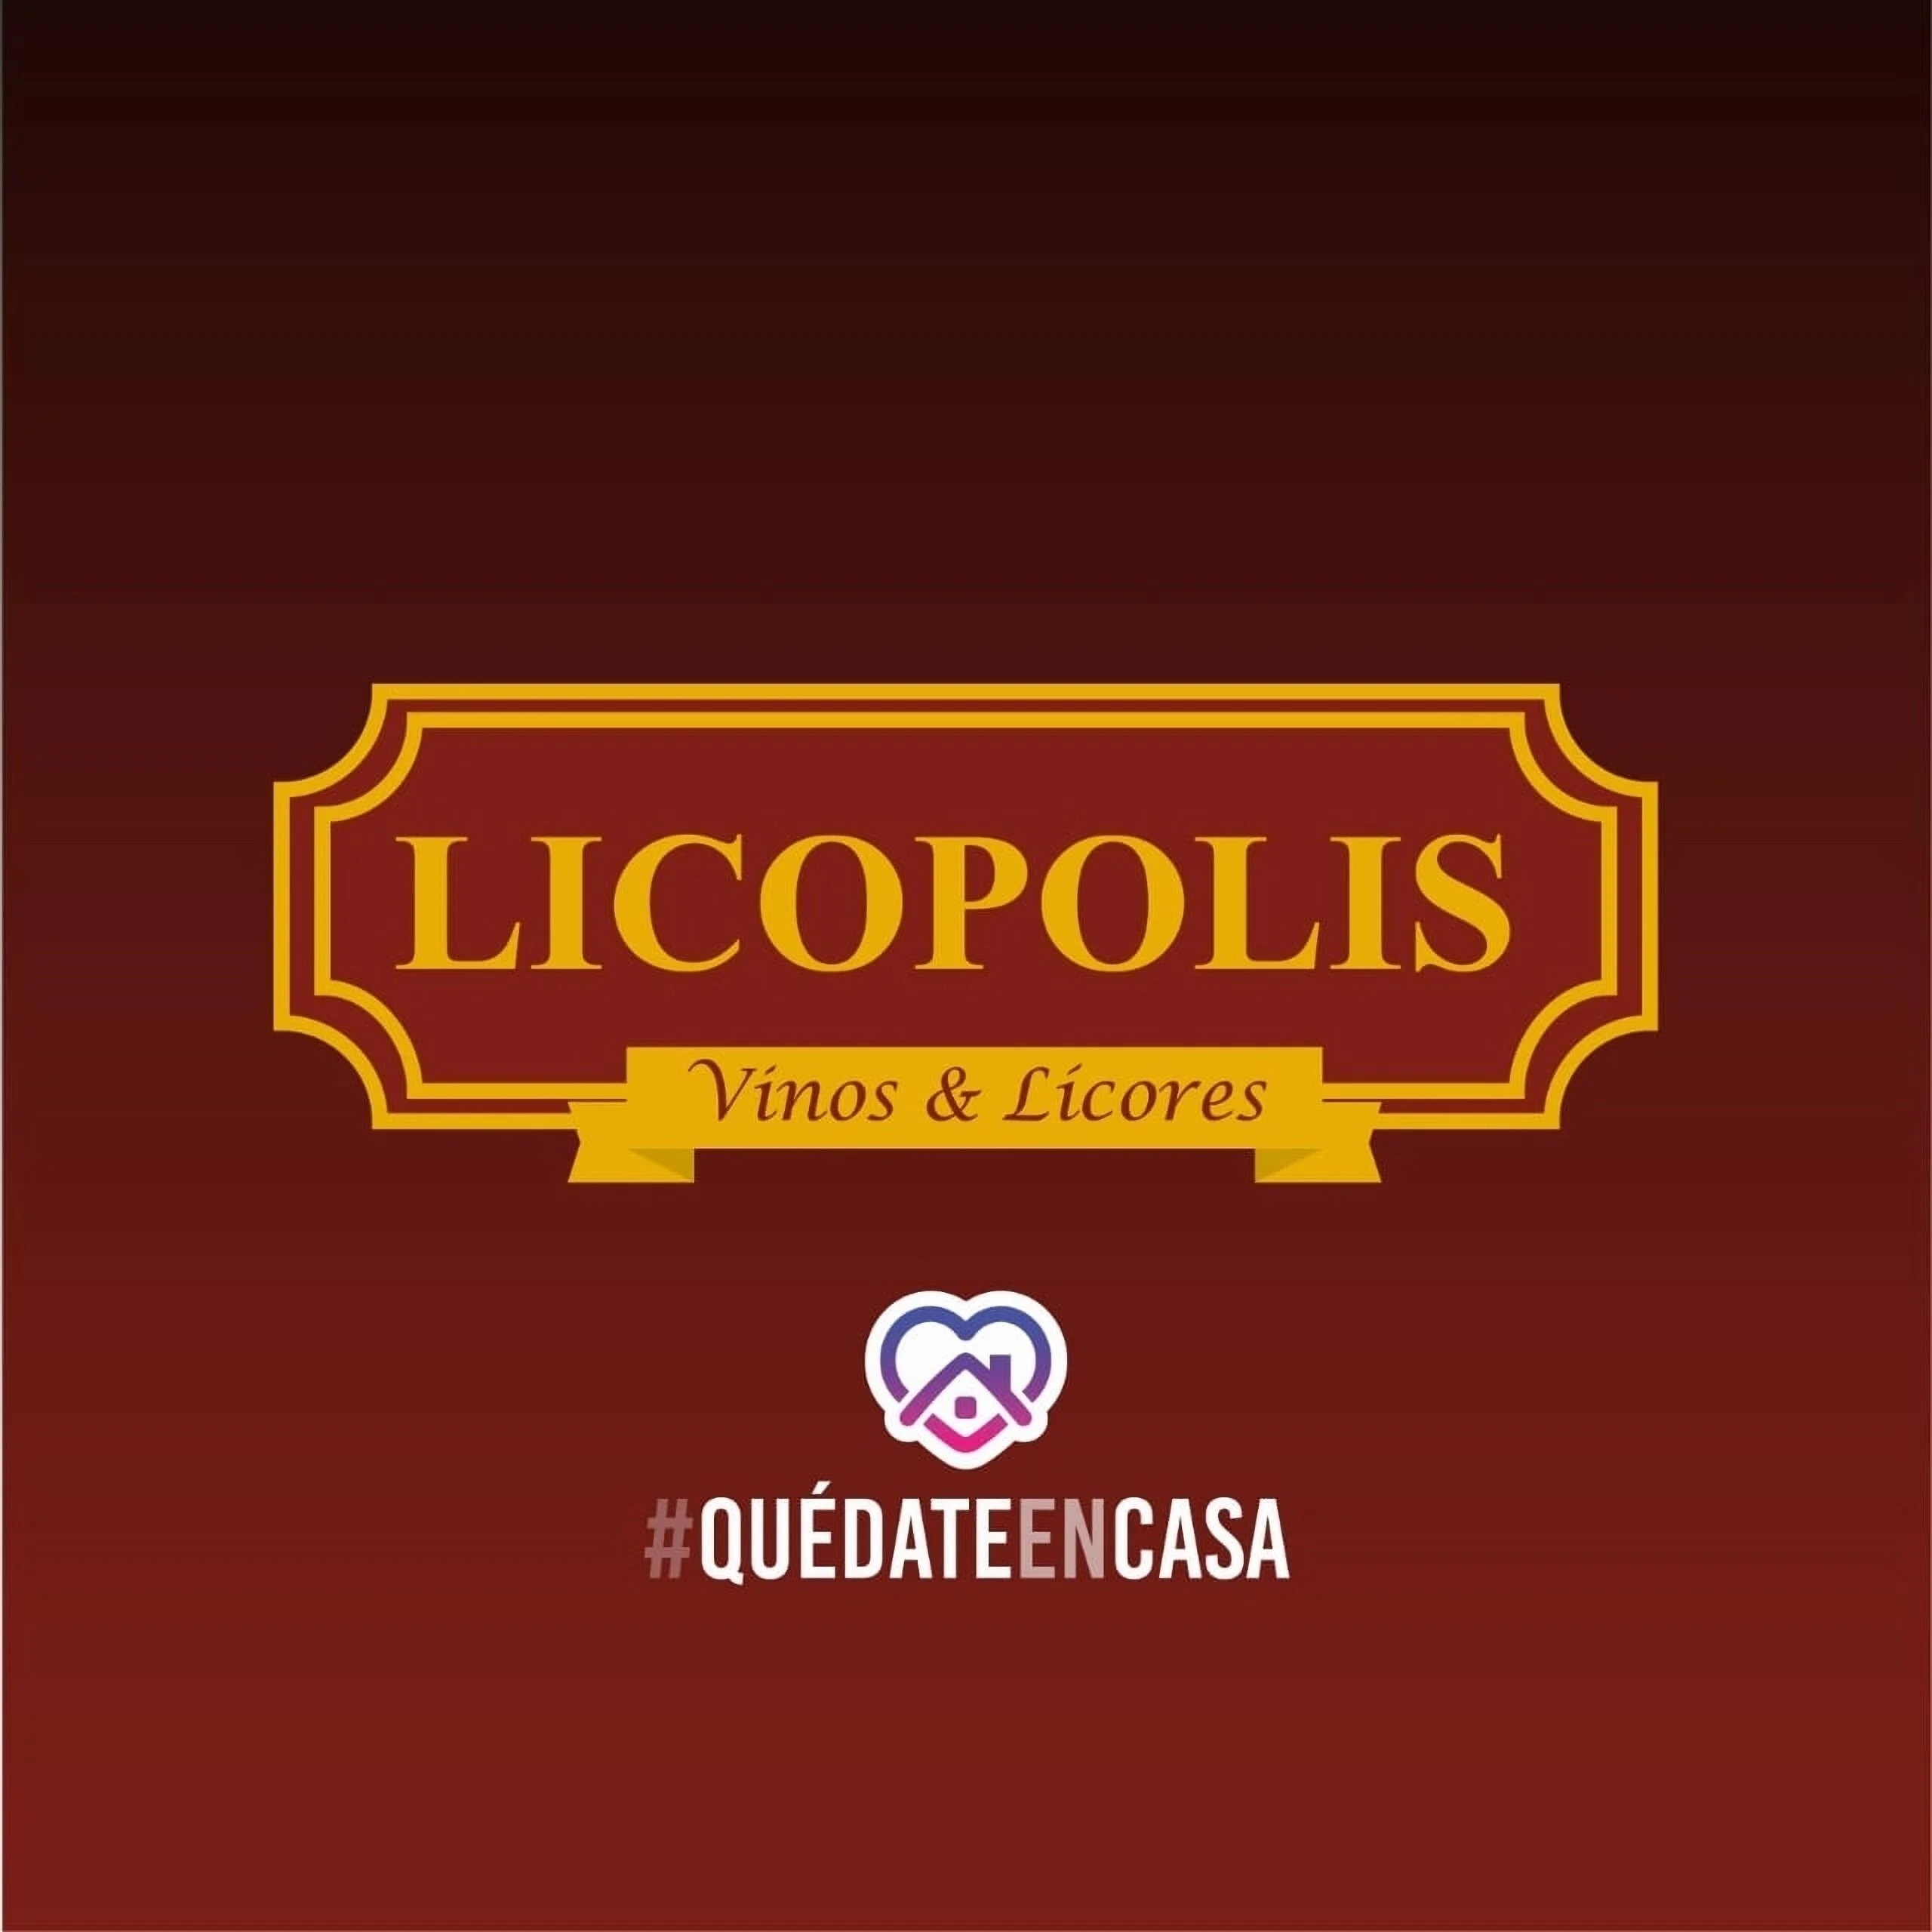 Licores-licopolis-vinos-licores-17026